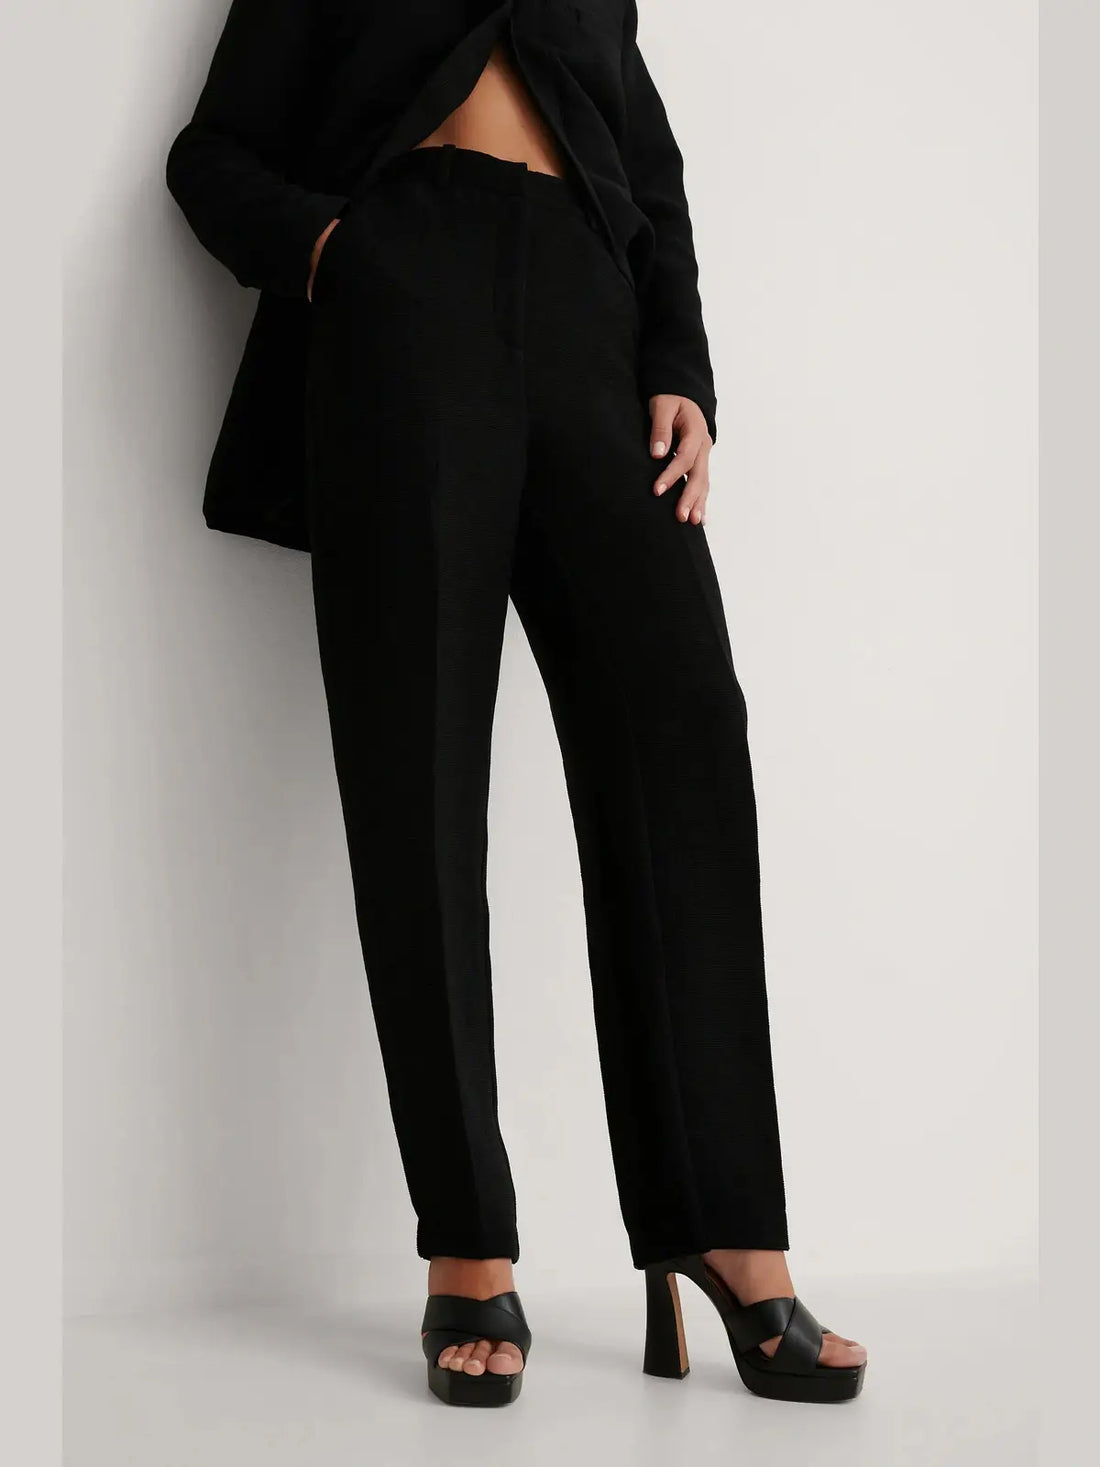 structured suitpants - black